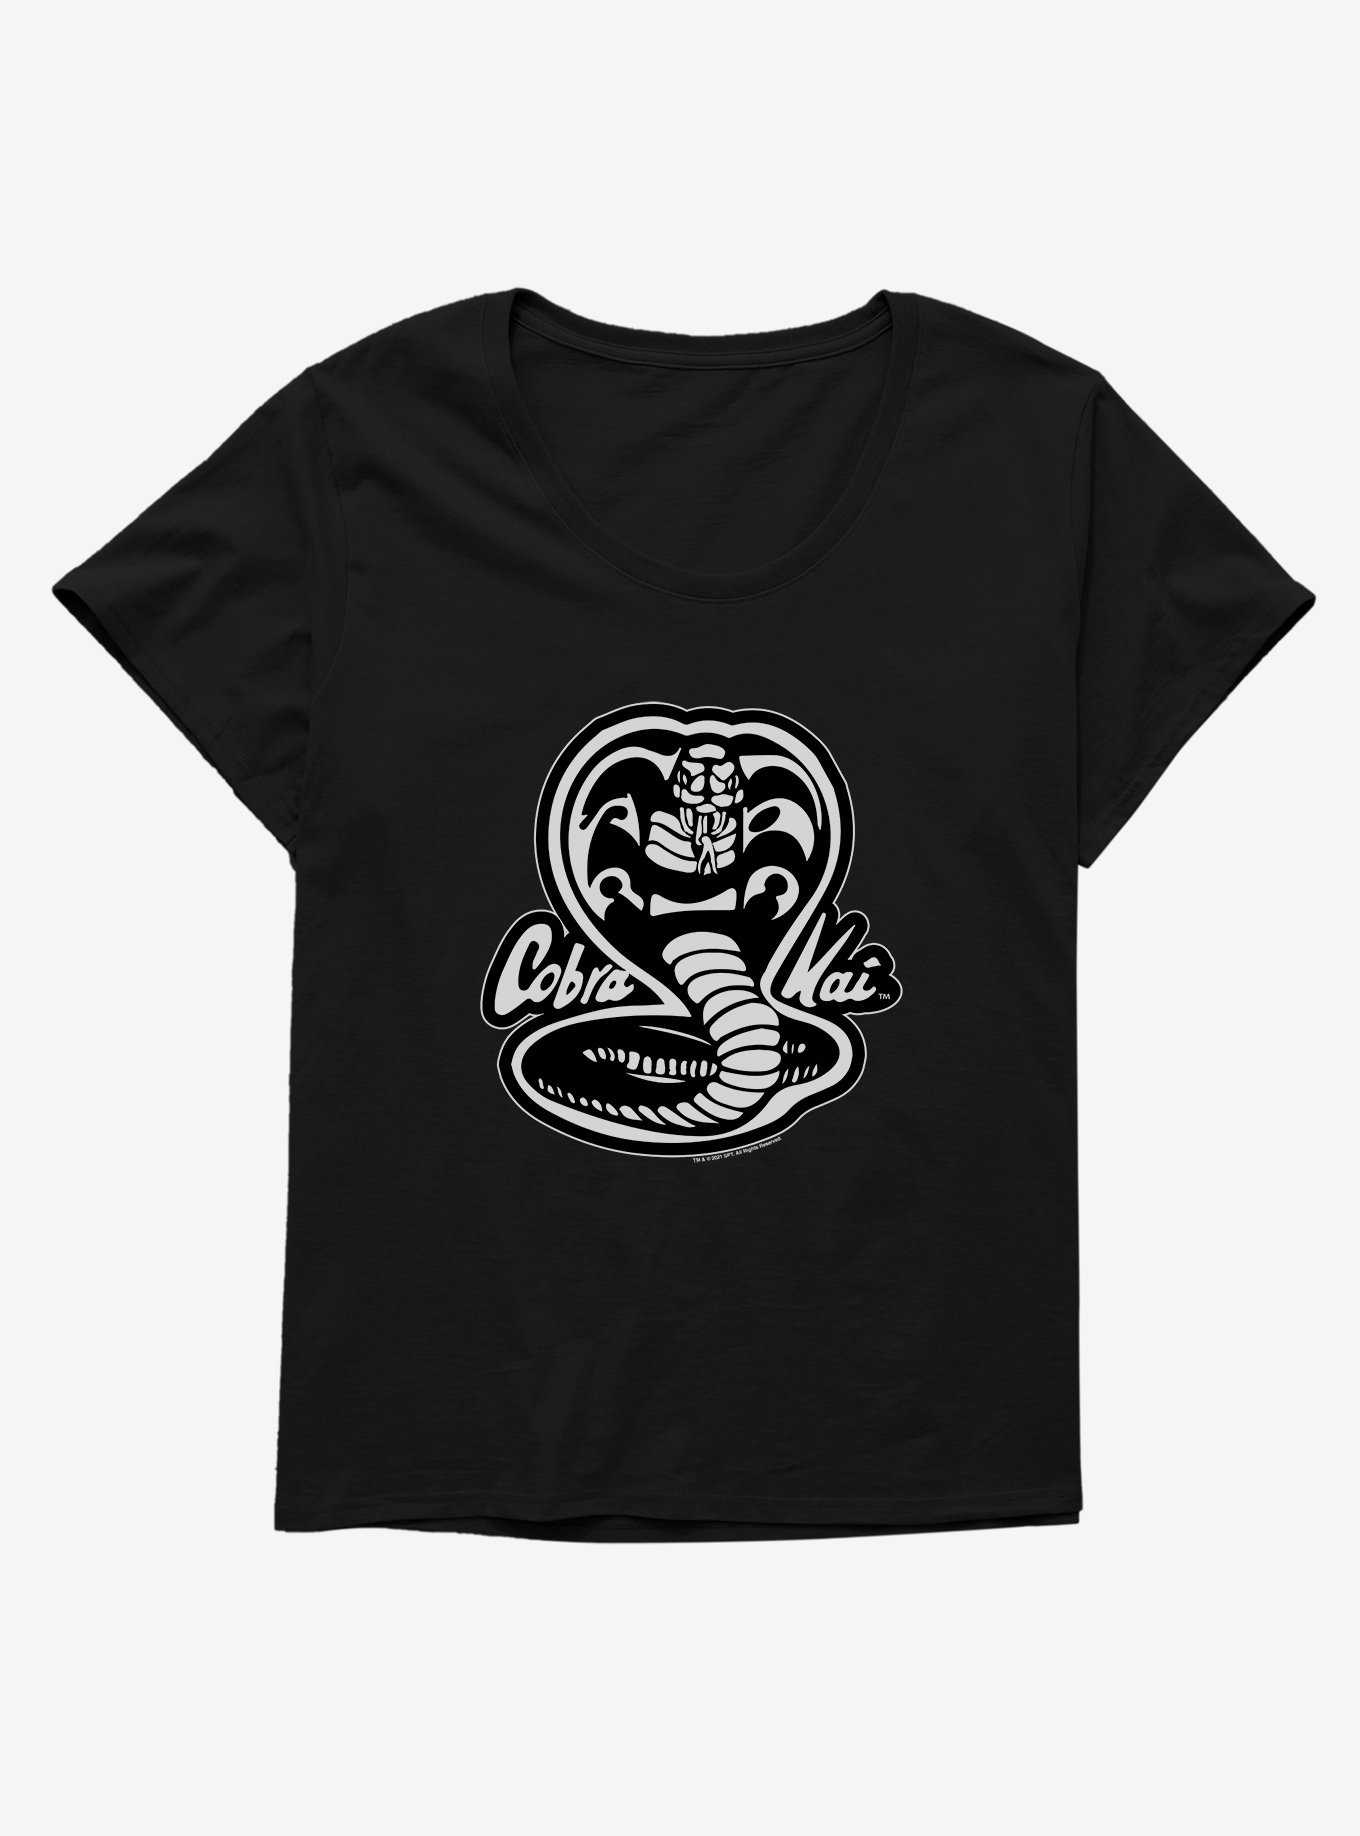 Cobra Kai Black And White Logo Womens T-Shirt Plus Size, , hi-res